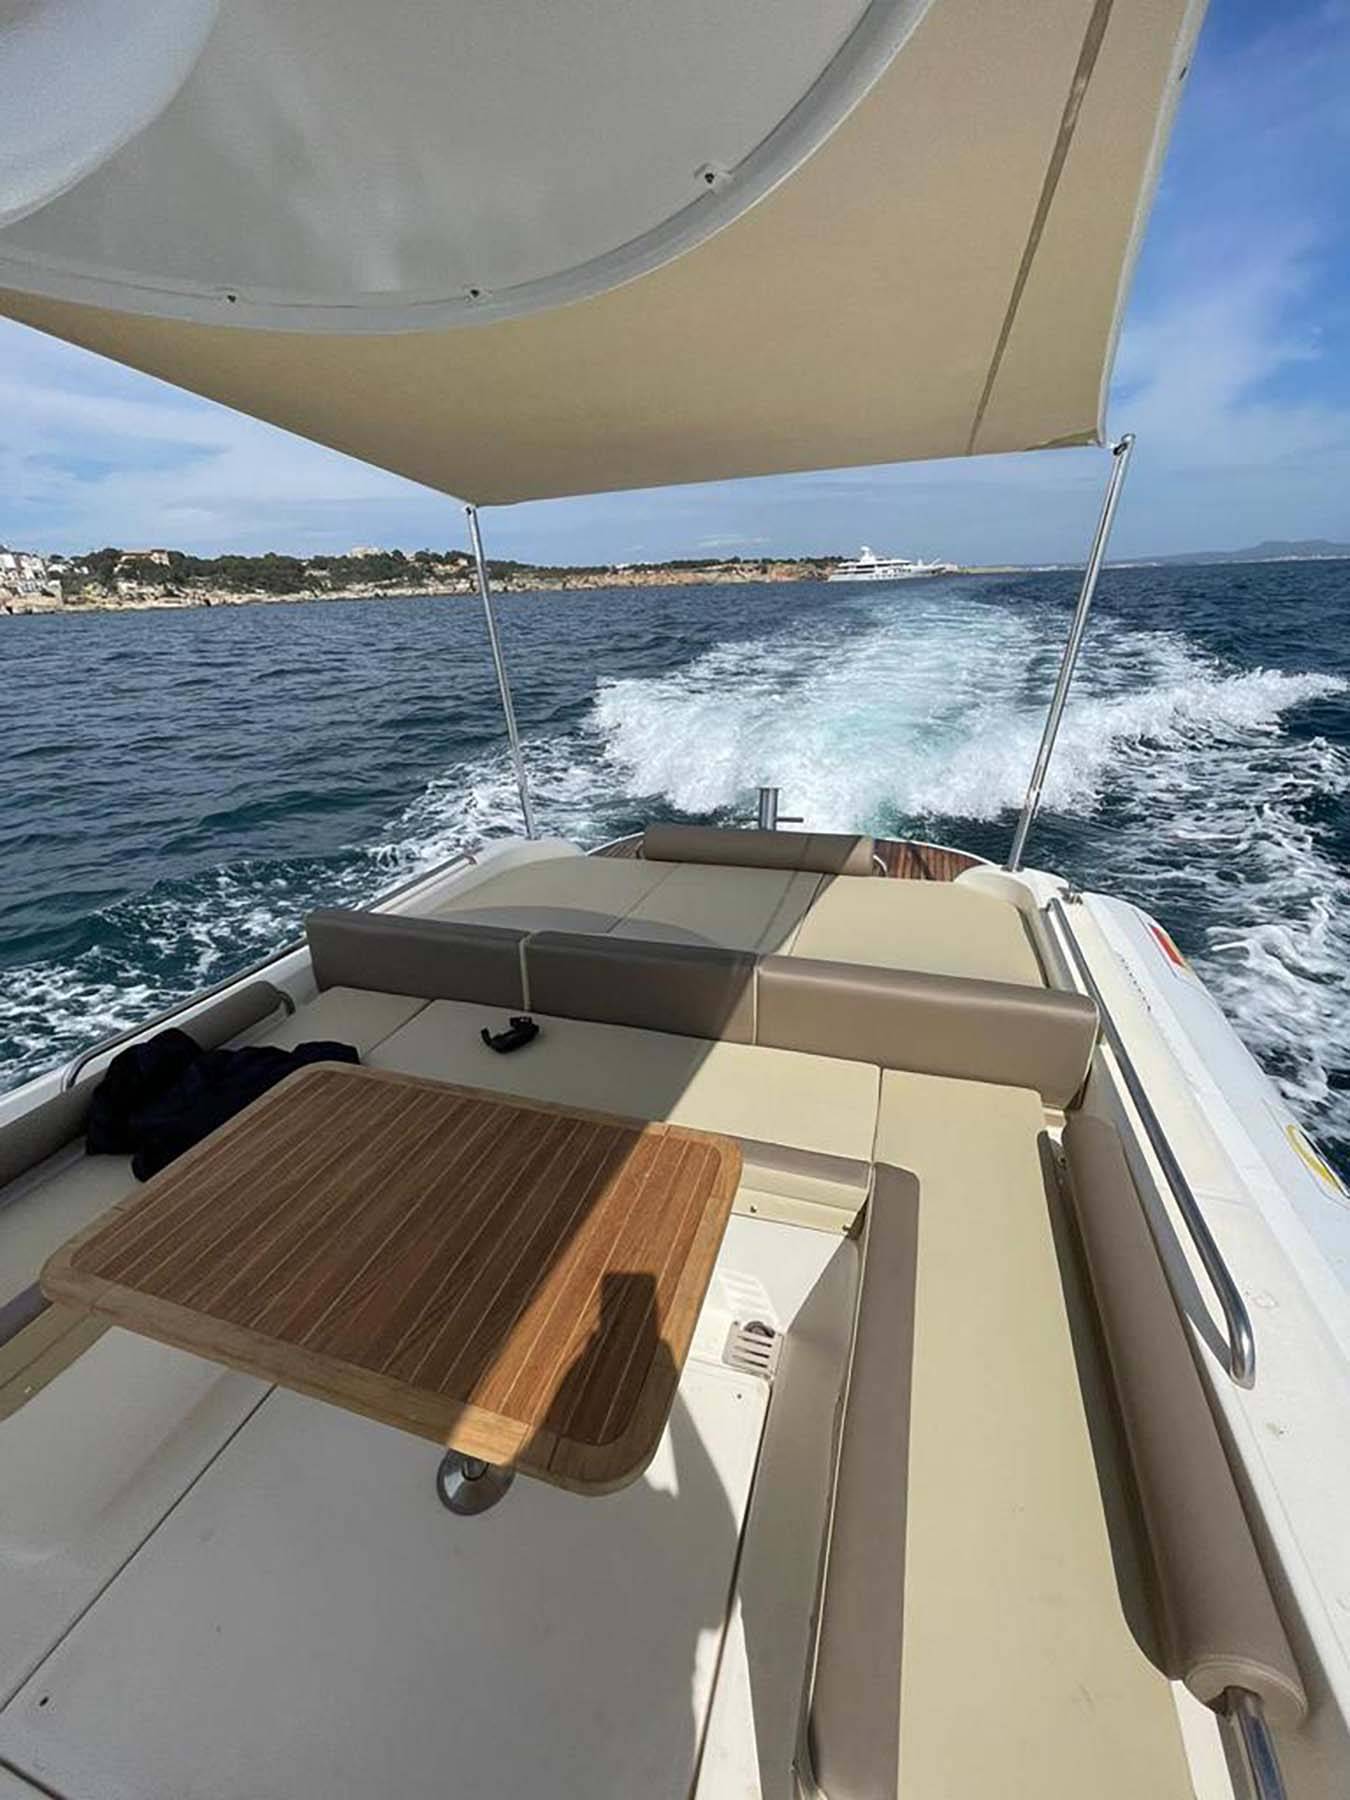 Day charter in Mallorca. Phoenix Moncada yachts